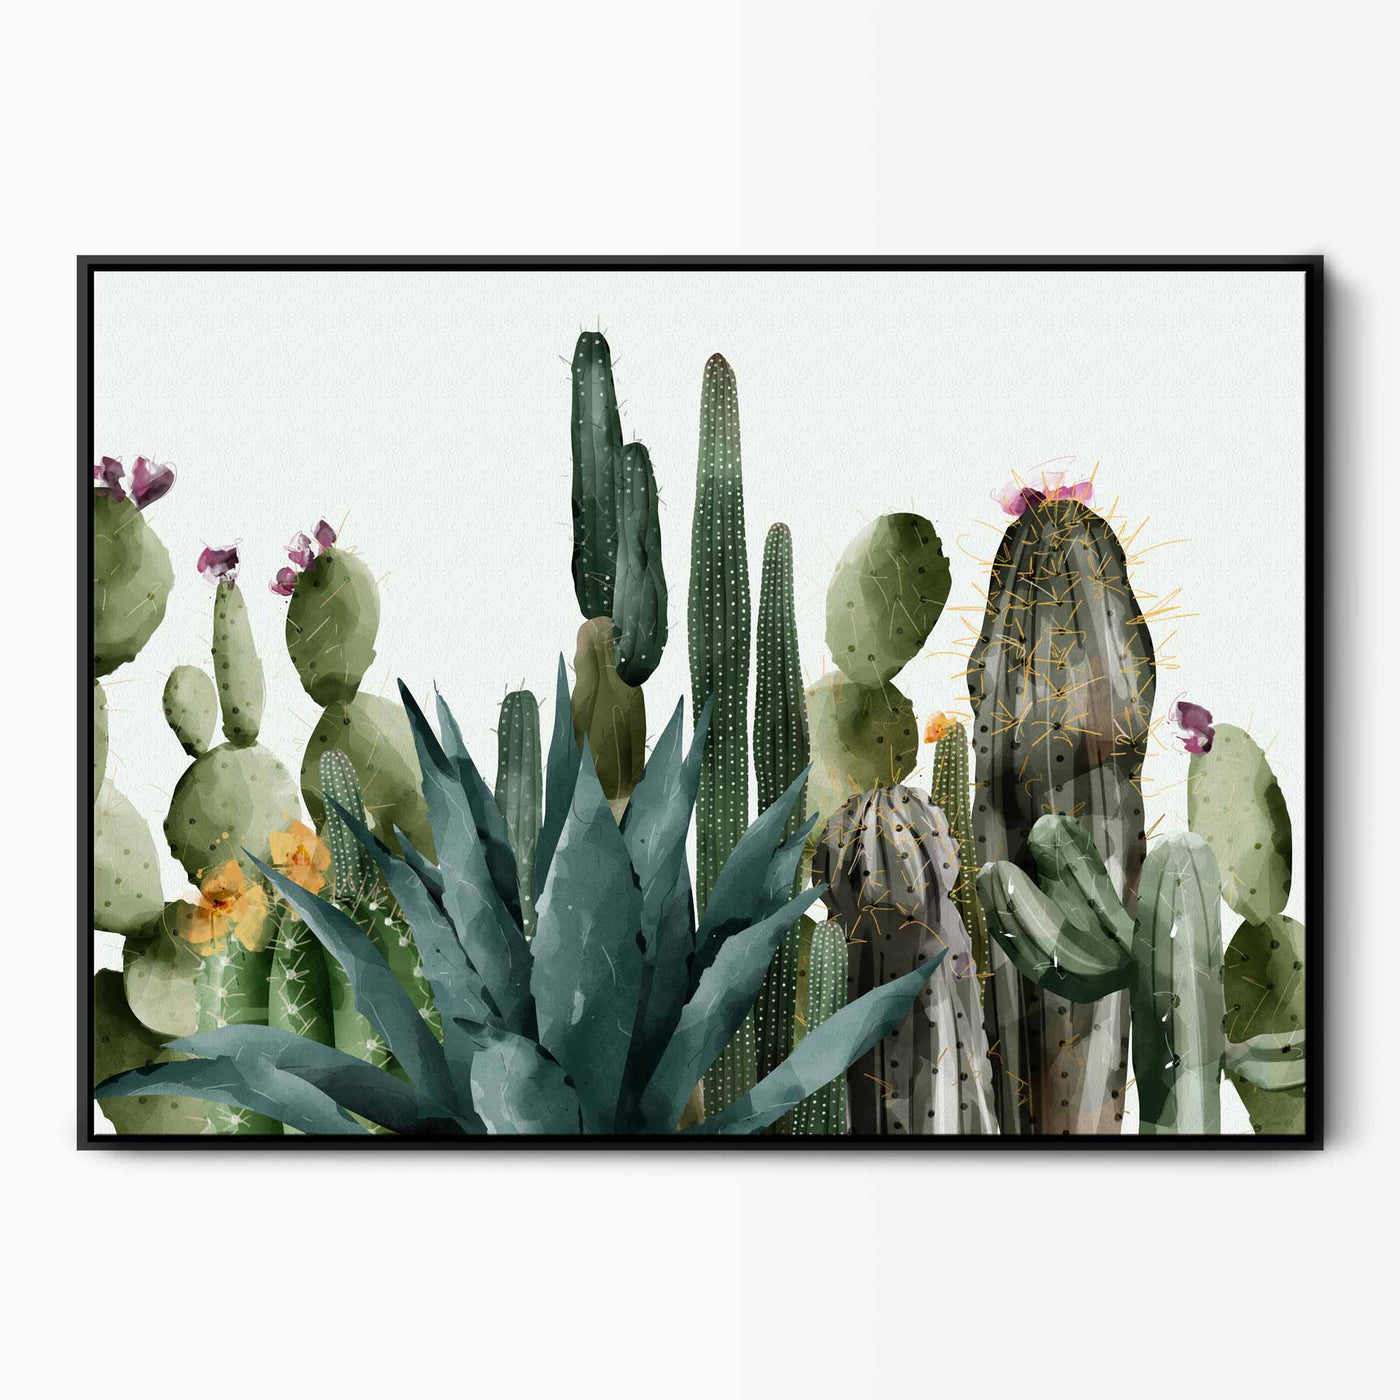 Green Lili Large Cactus Garden - Framed Canvas